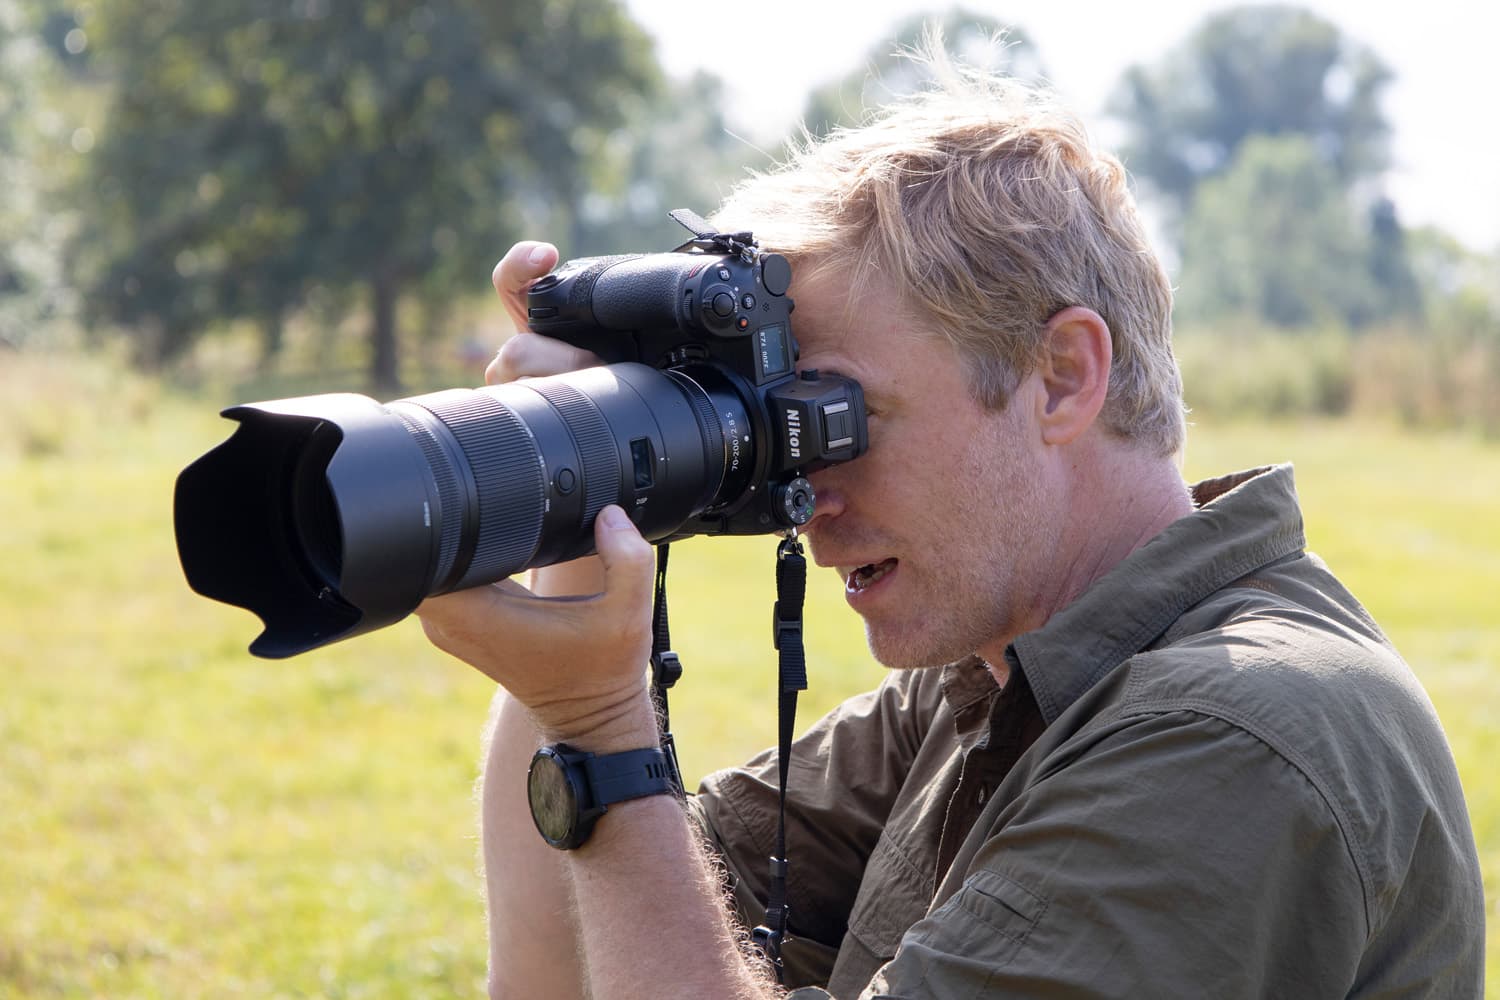 Nikon Z7 II review: Digital Photography Review